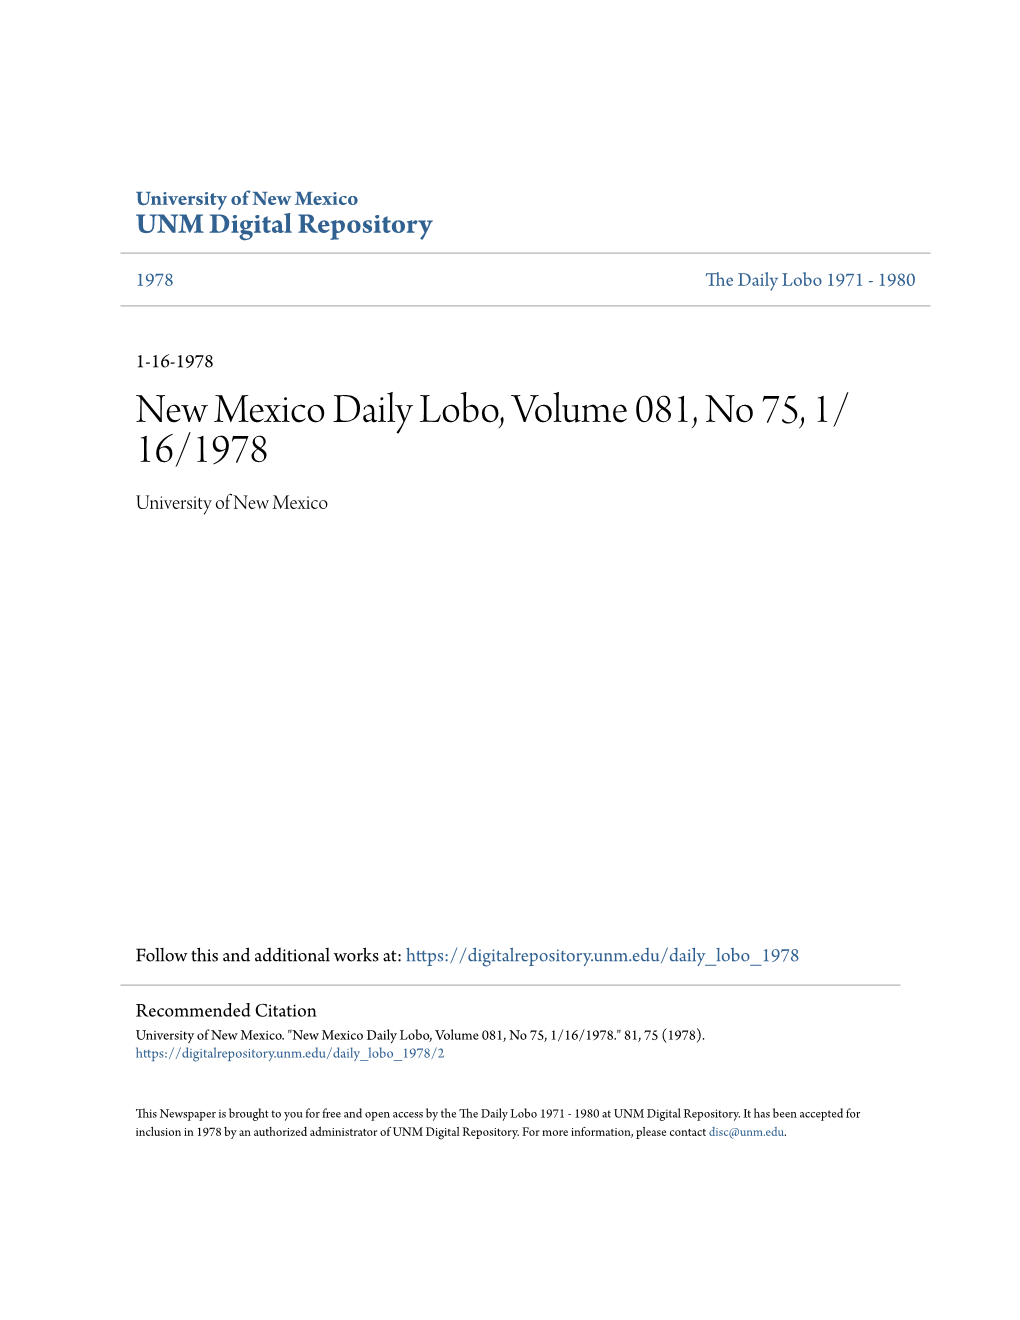 New Mexico Daily Lobo, Volume 081, No 75, 1/16/1978." 81, 75 (1978)